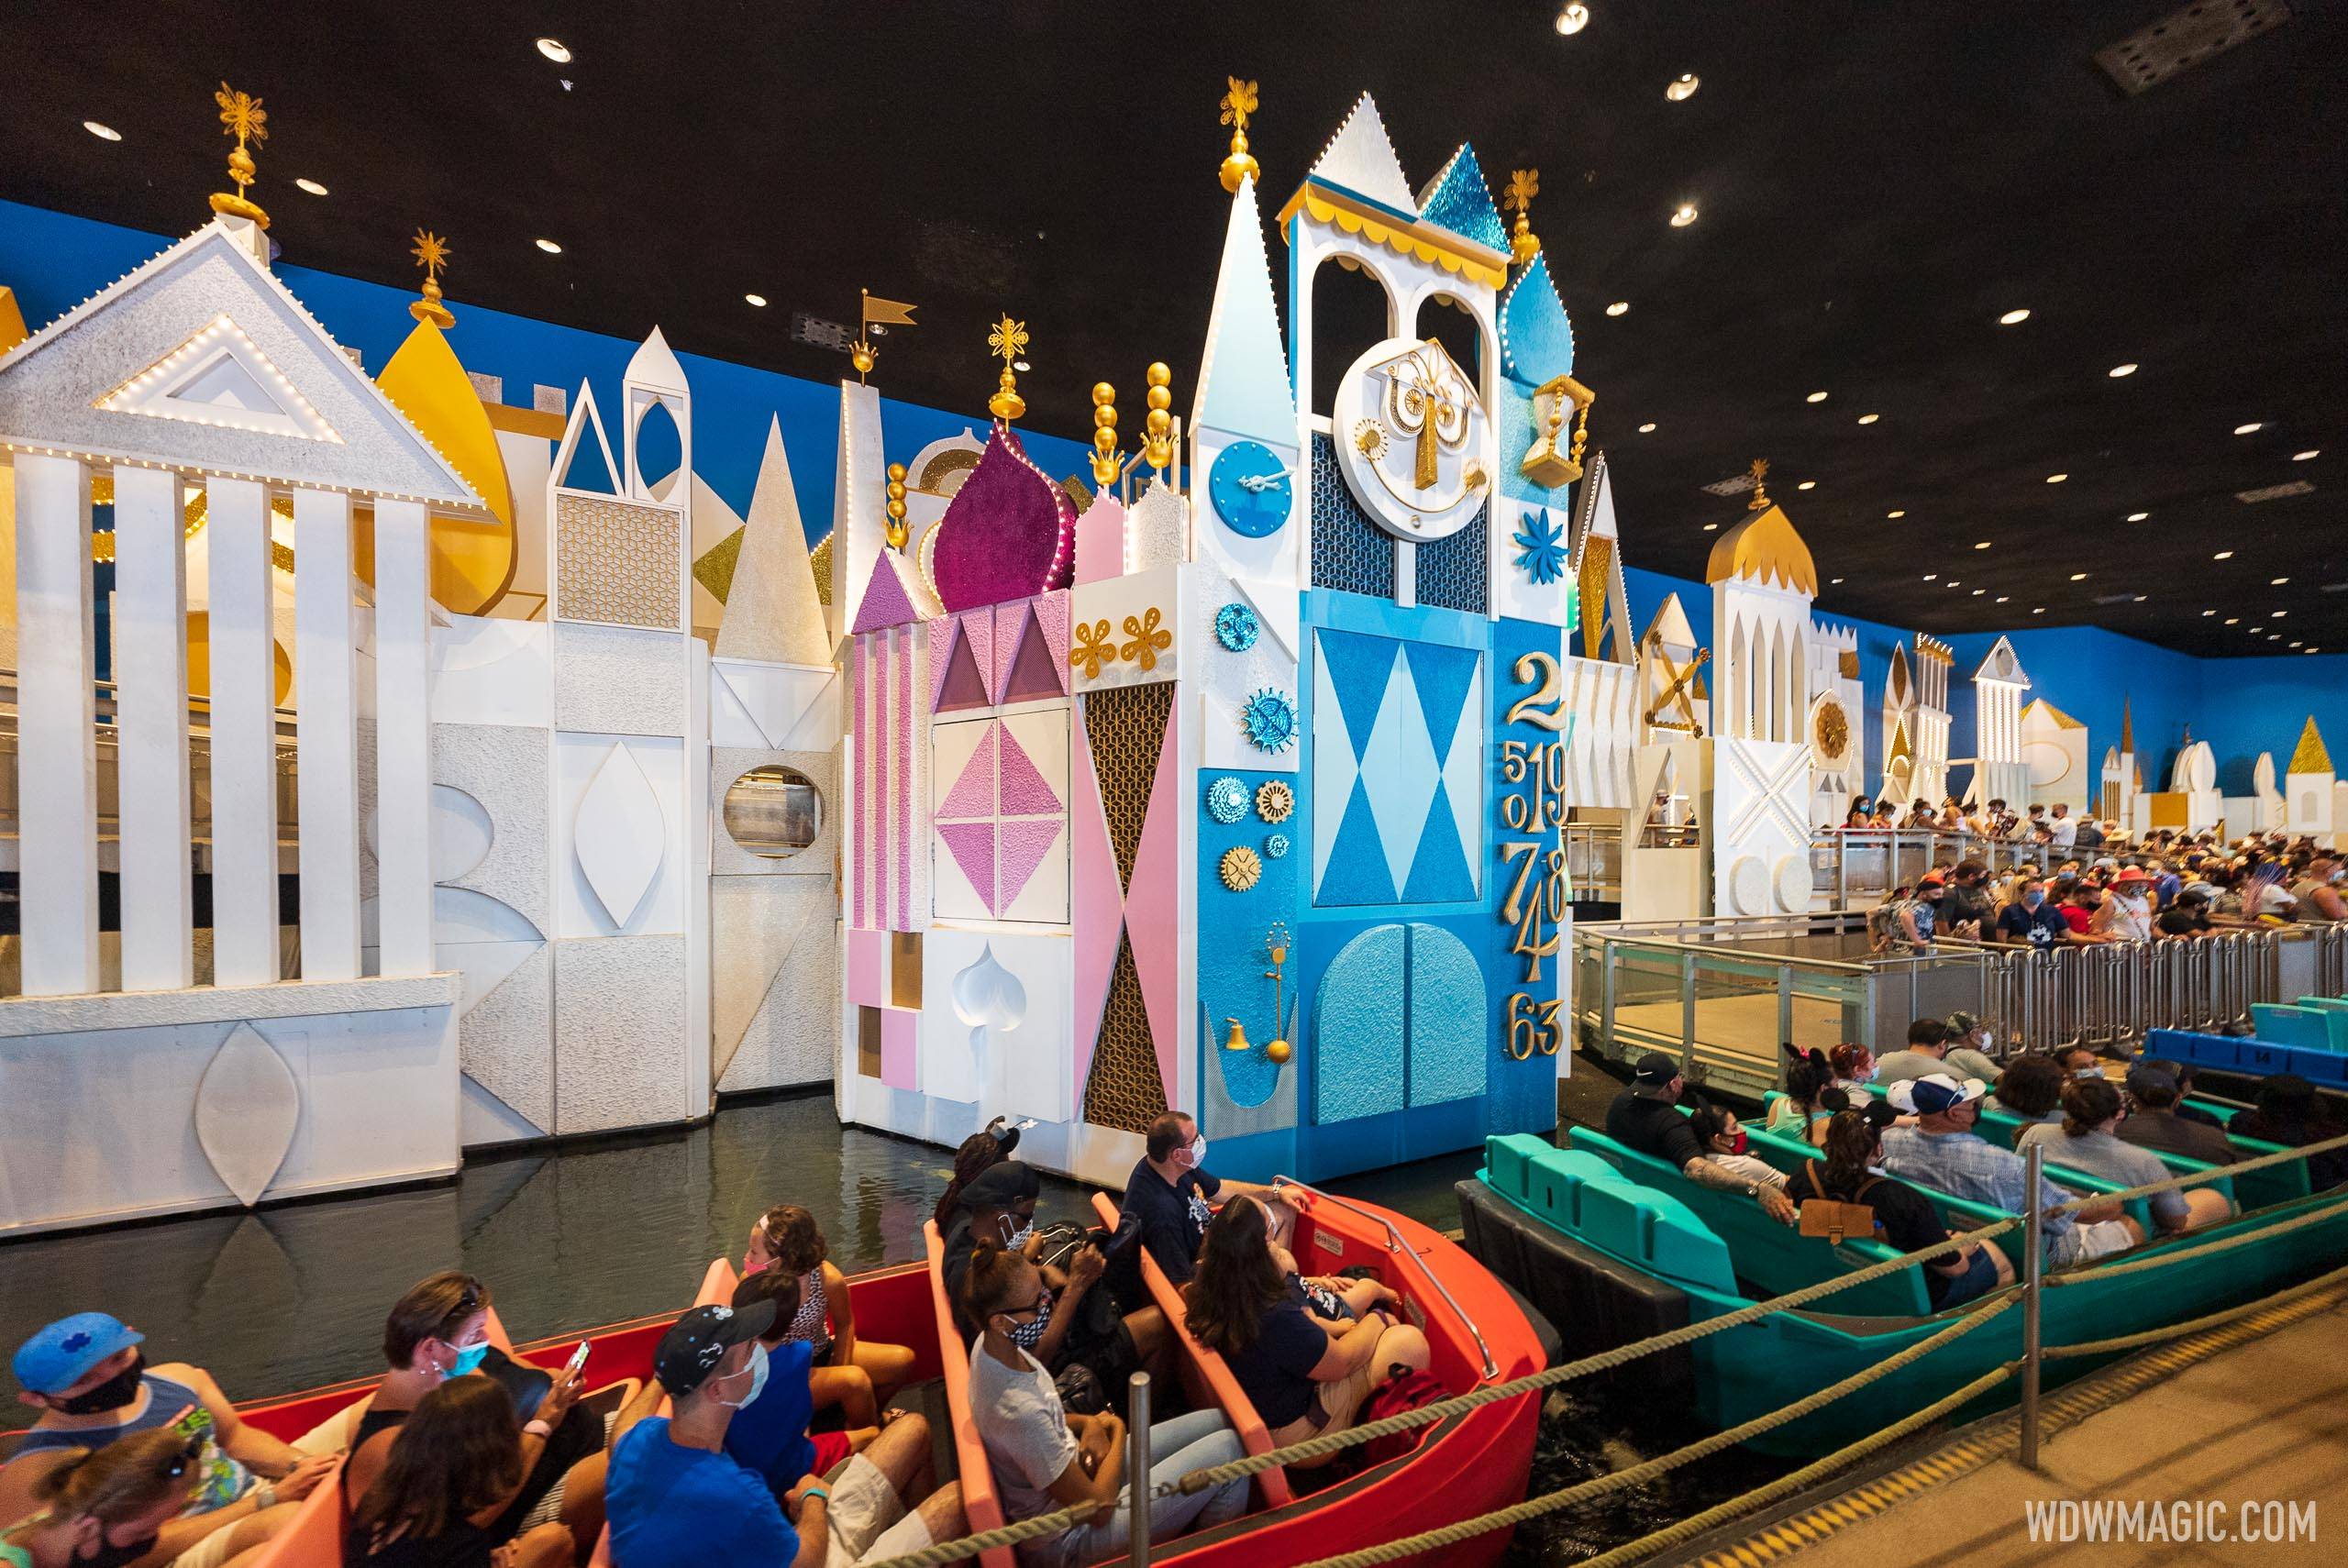 Guests wearing masks while indoors at Walt Disney World's Magic Kingdom